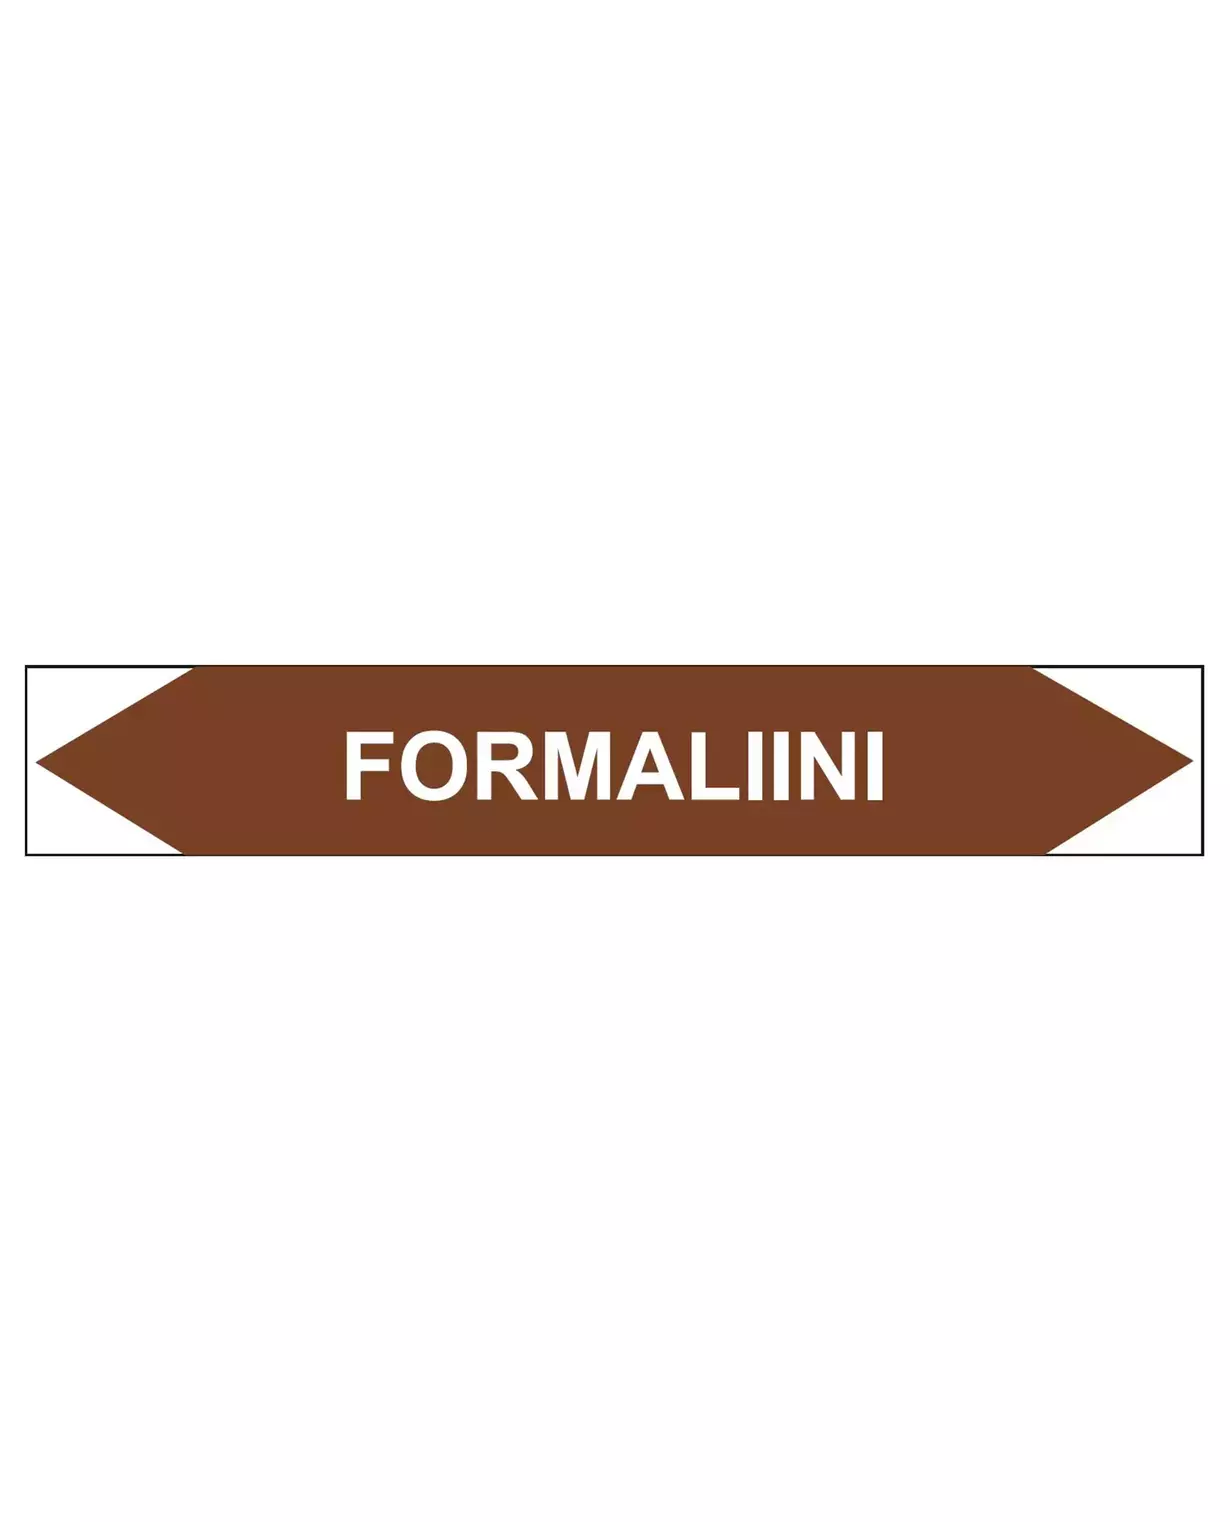 Formaliini, 250x40 mm